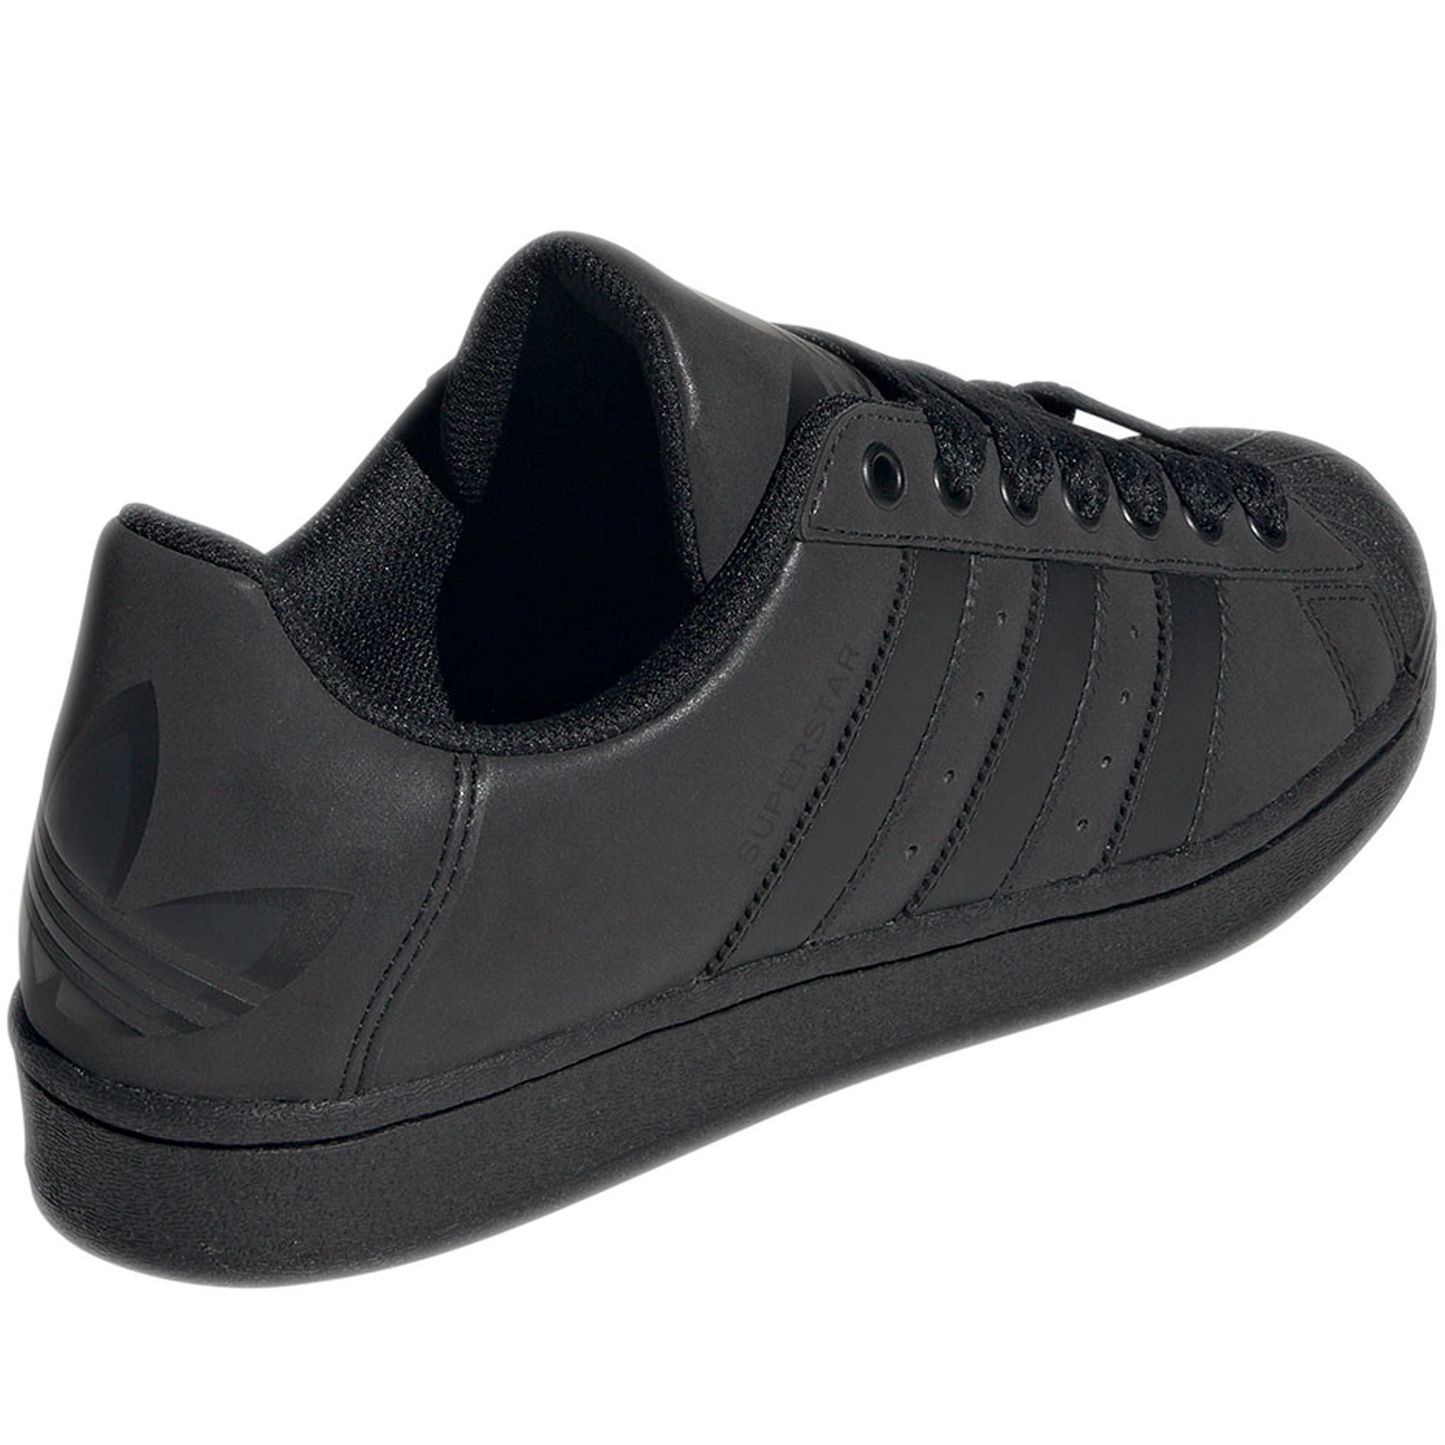 Men's Adidas Superstar Shoes - All Black